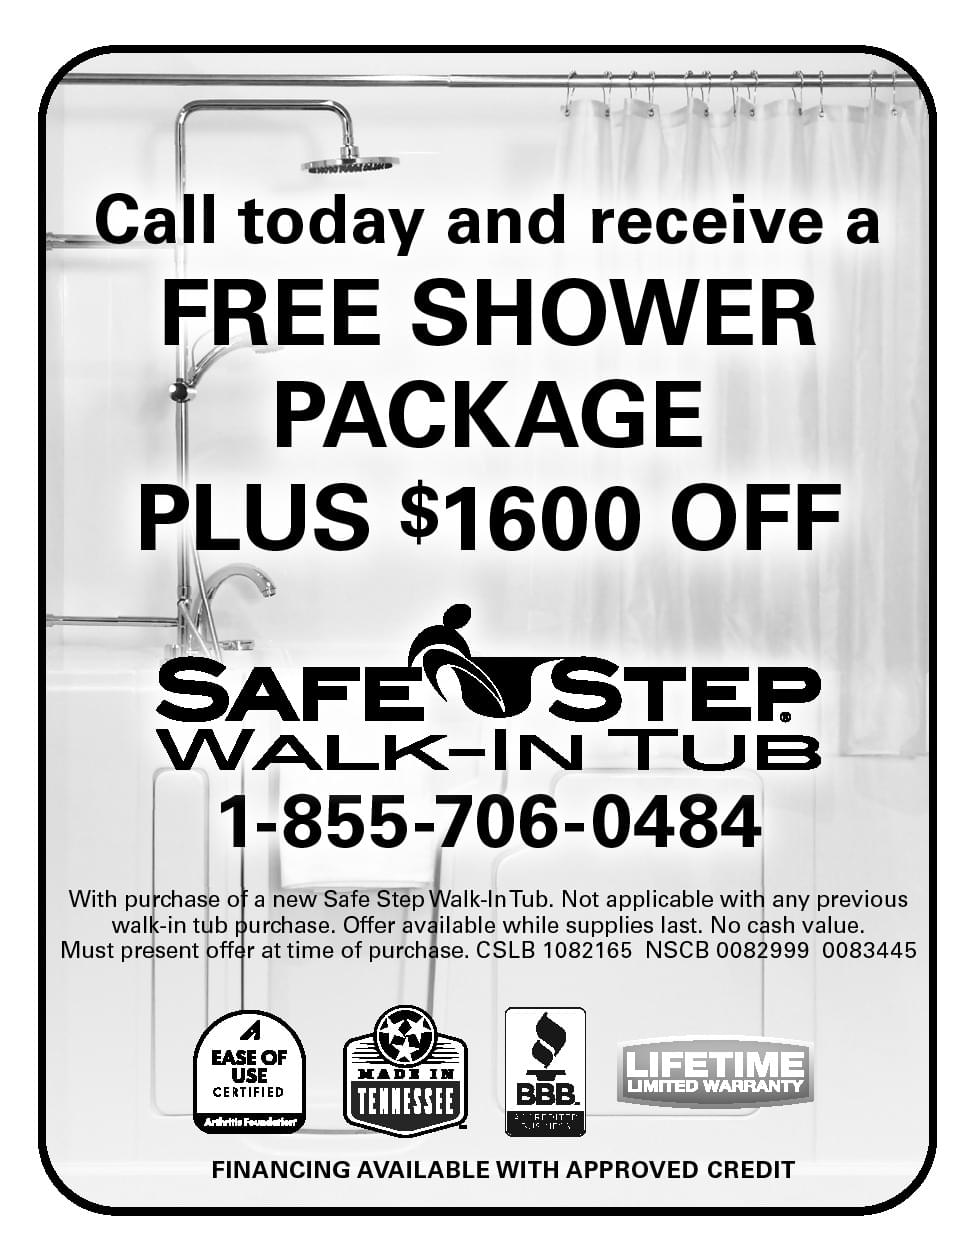 Safe Step Walk-in Tub Ad in Coffee News